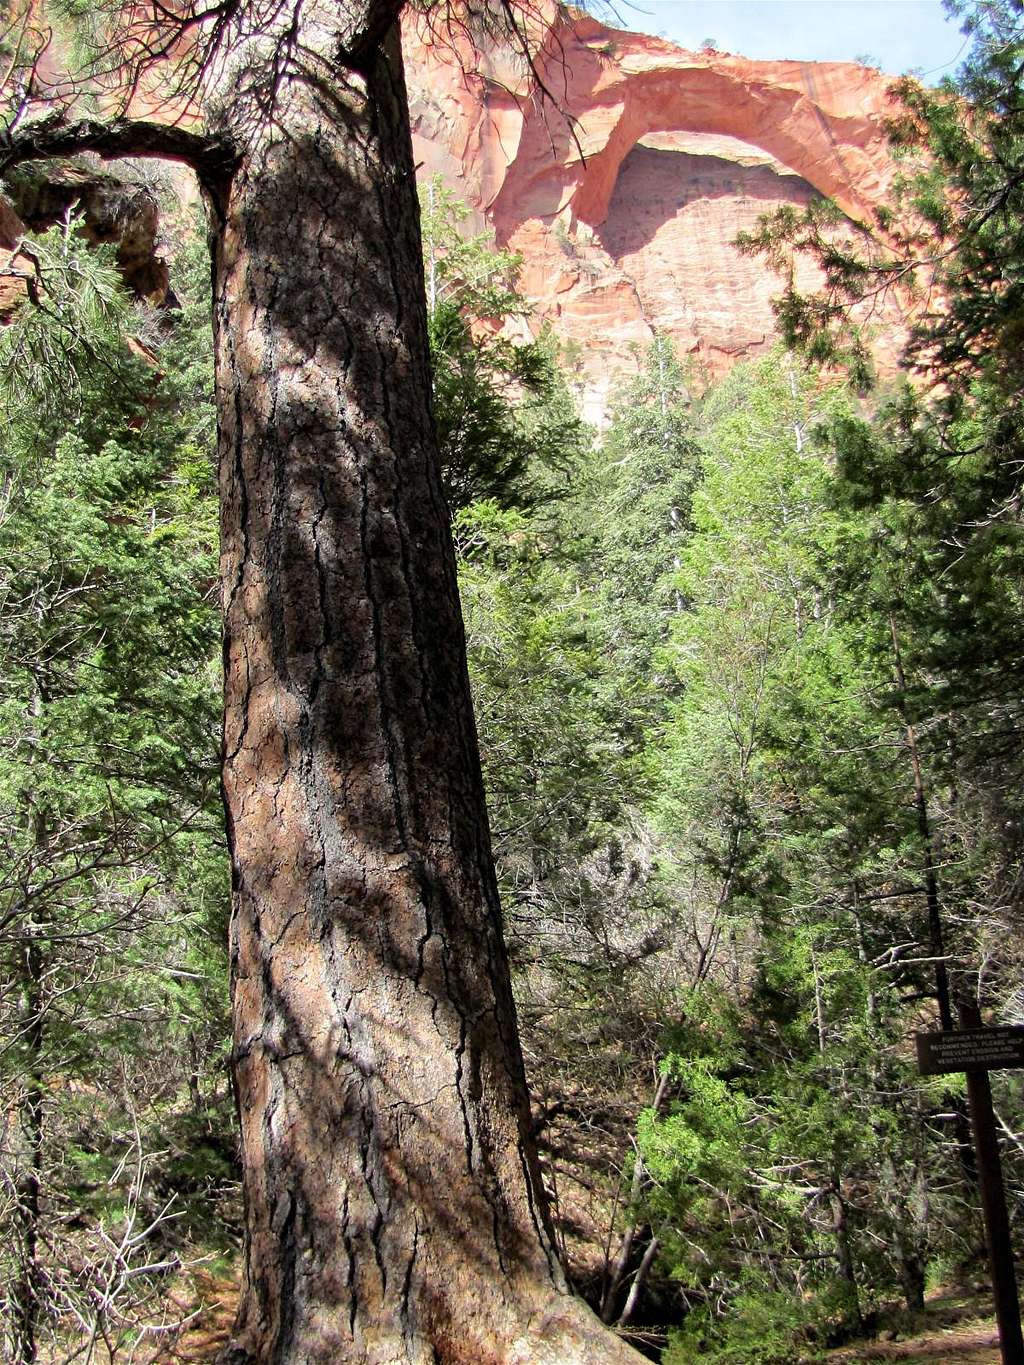 Kolob Arch and Giant Pine Tree